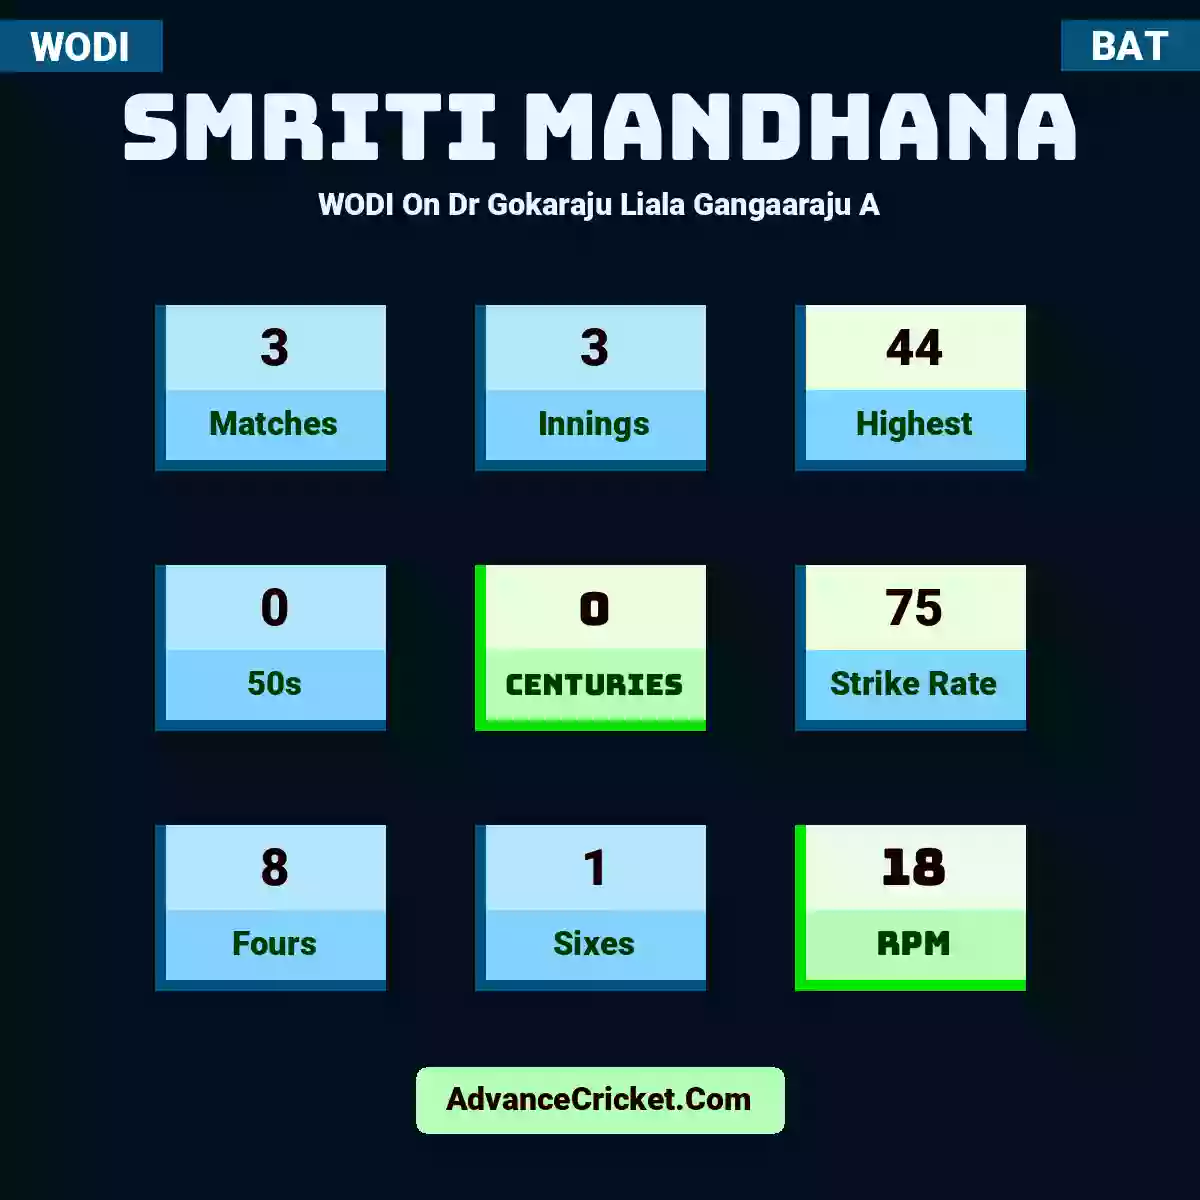 Smriti Mandhana WODI  On Dr Gokaraju Liala Gangaaraju A, Smriti Mandhana played 3 matches, scored 44 runs as highest, 0 half-centuries, and 0 centuries, with a strike rate of 75. S.Mandhana hit 8 fours and 1 sixes, with an RPM of 18.